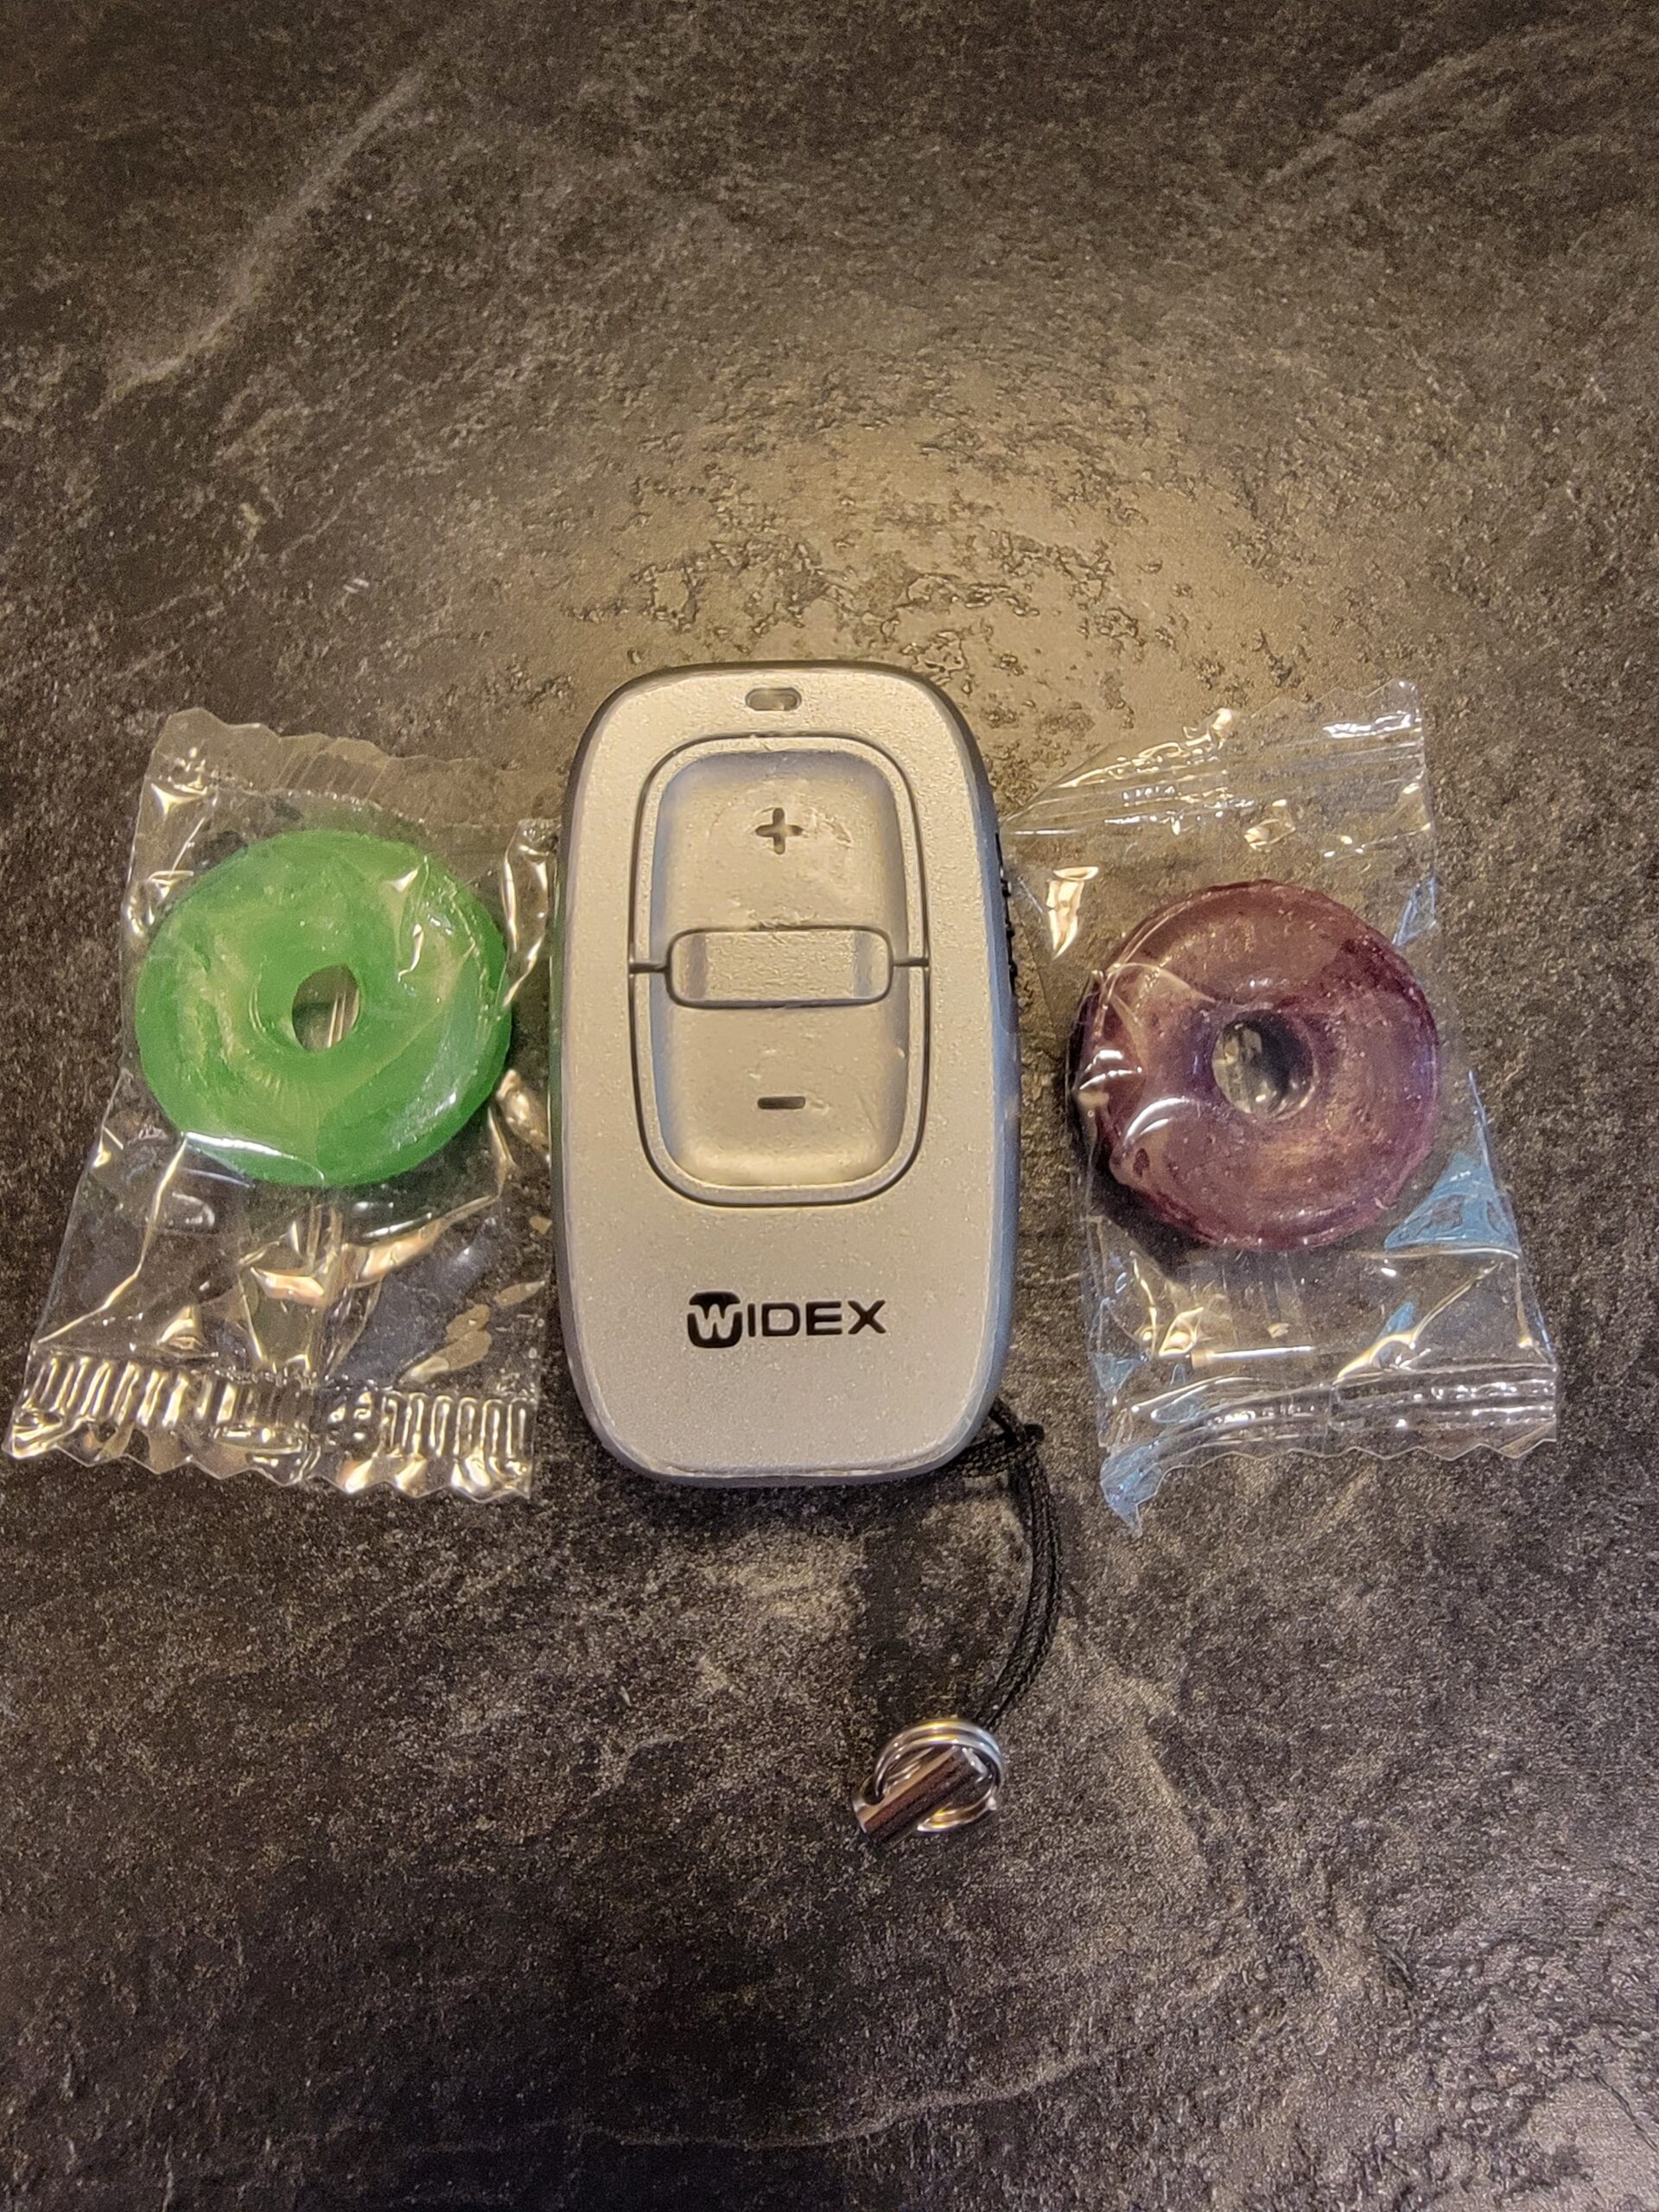 Widex remote control RC dex Hearing aids